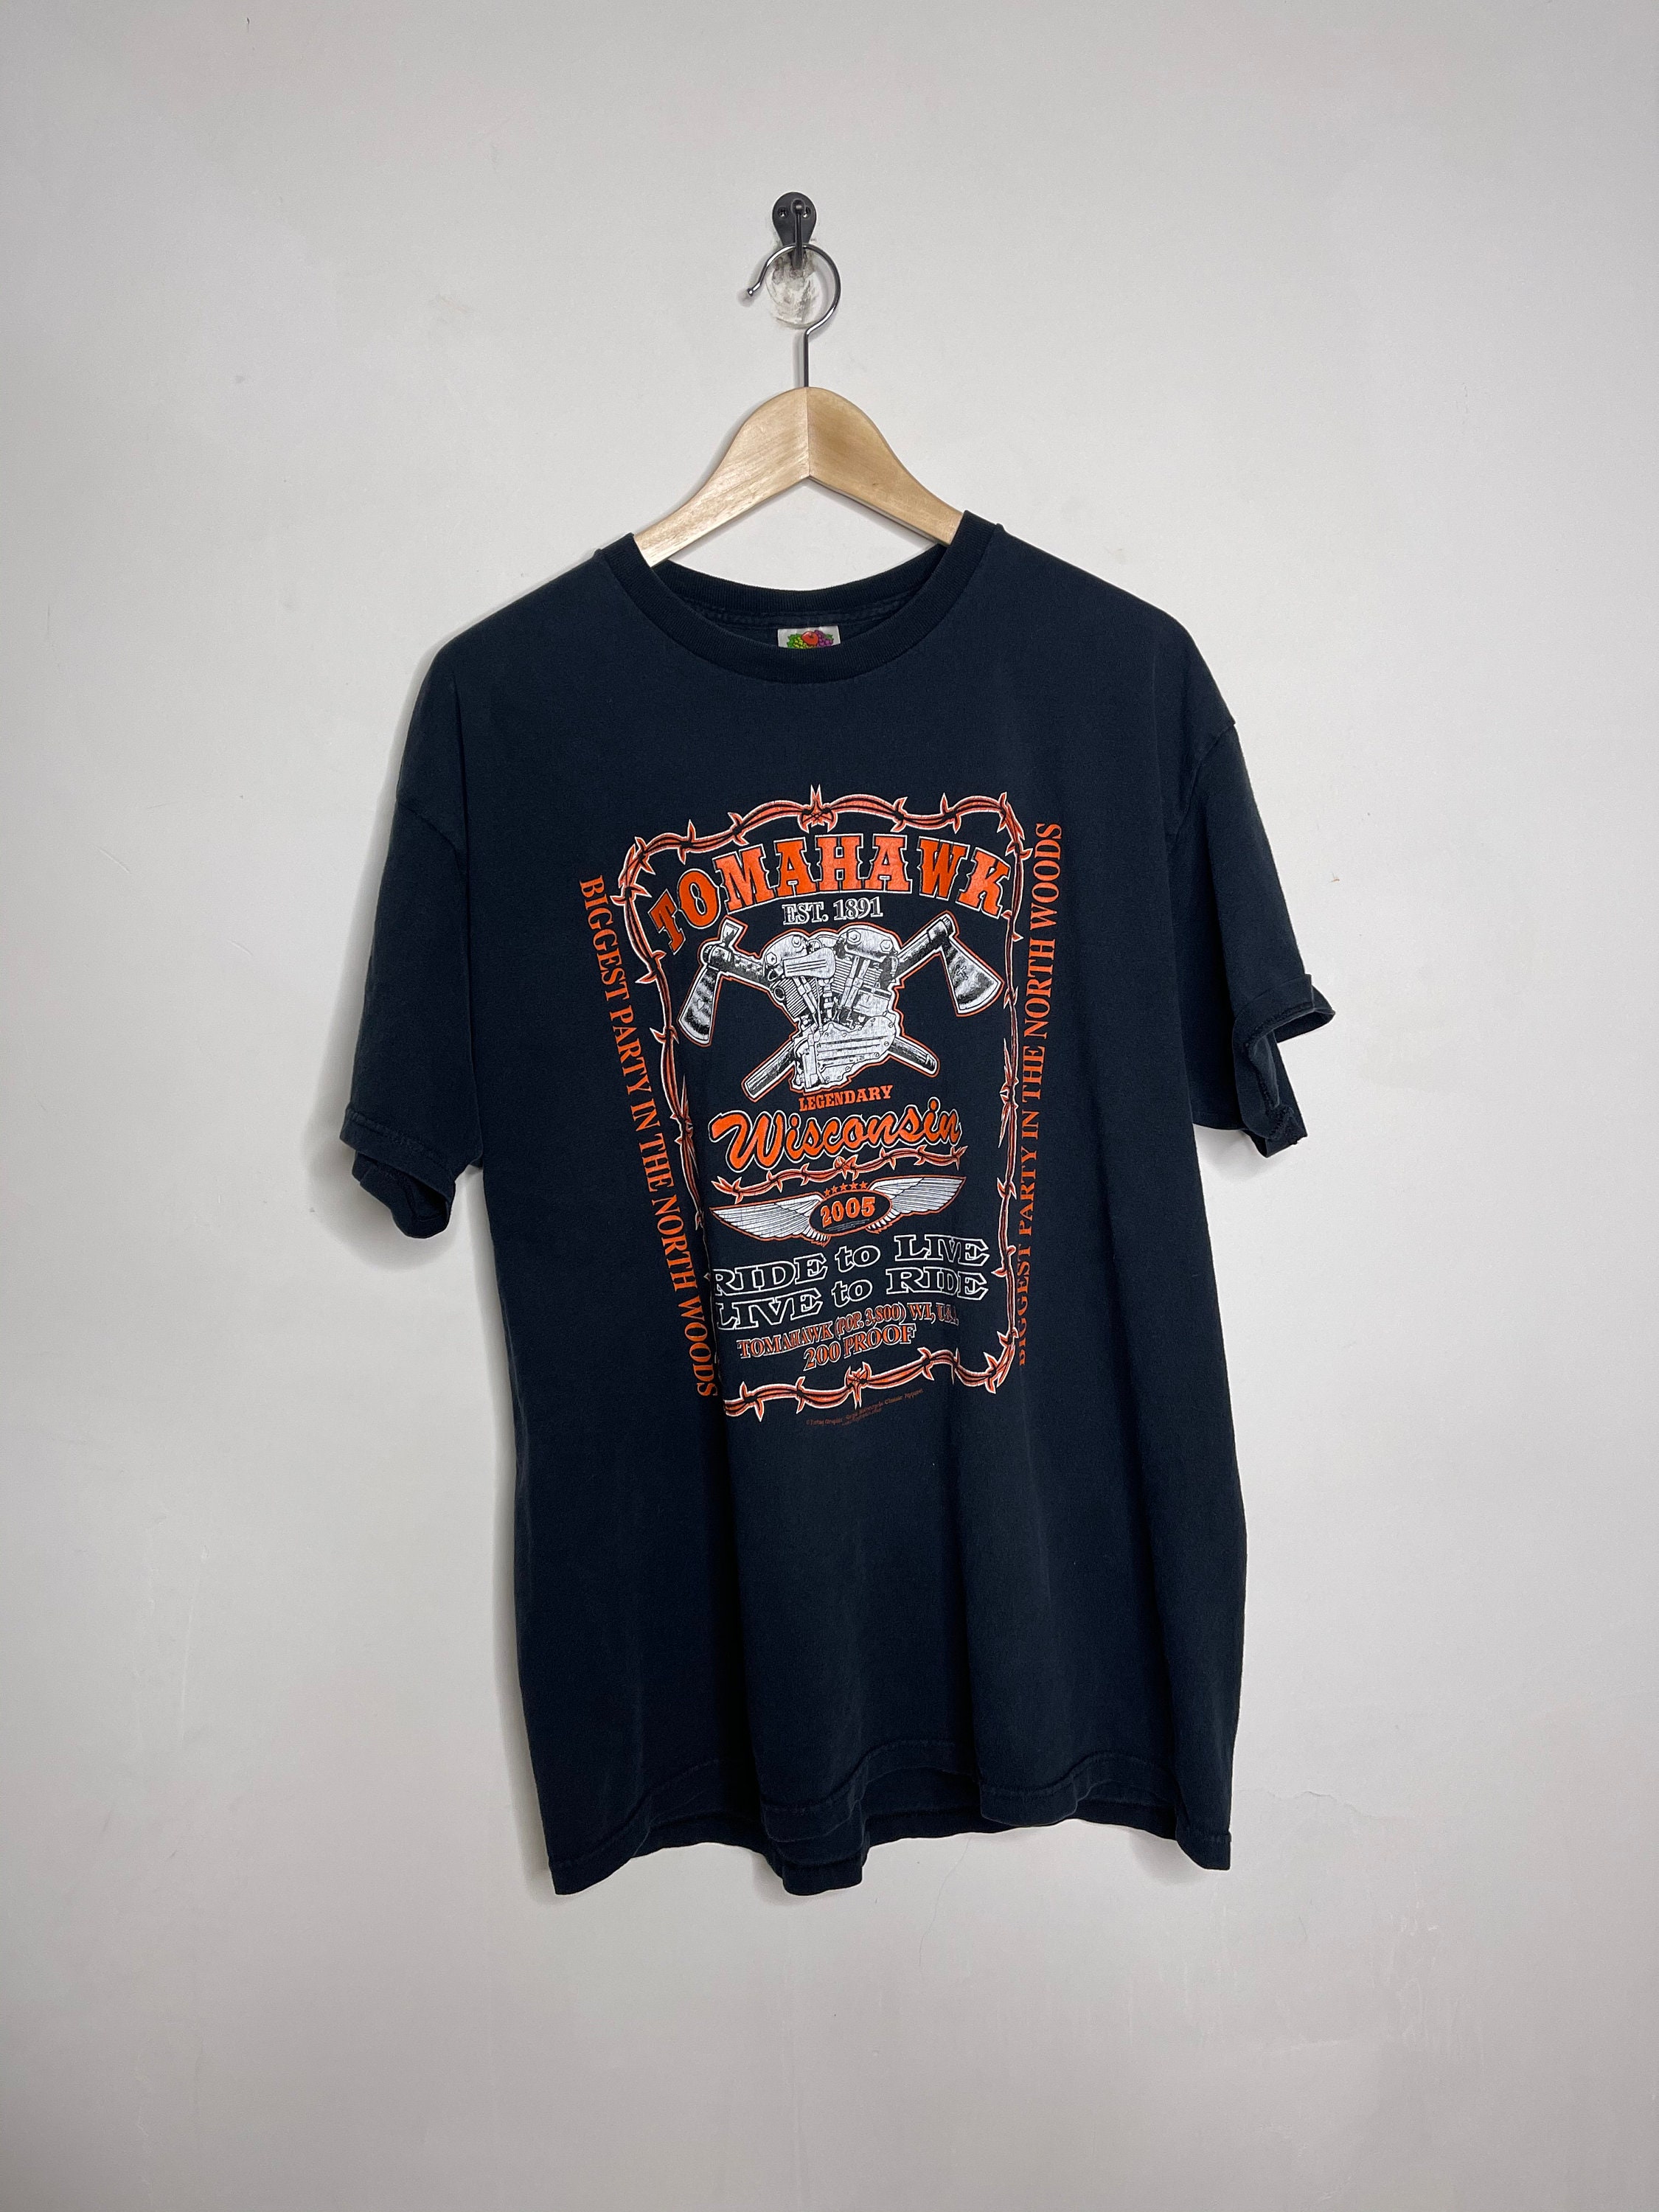 Tomahawk Fall Harley Ride Shirt Wisconsin Worn USA Vintage | Etsy